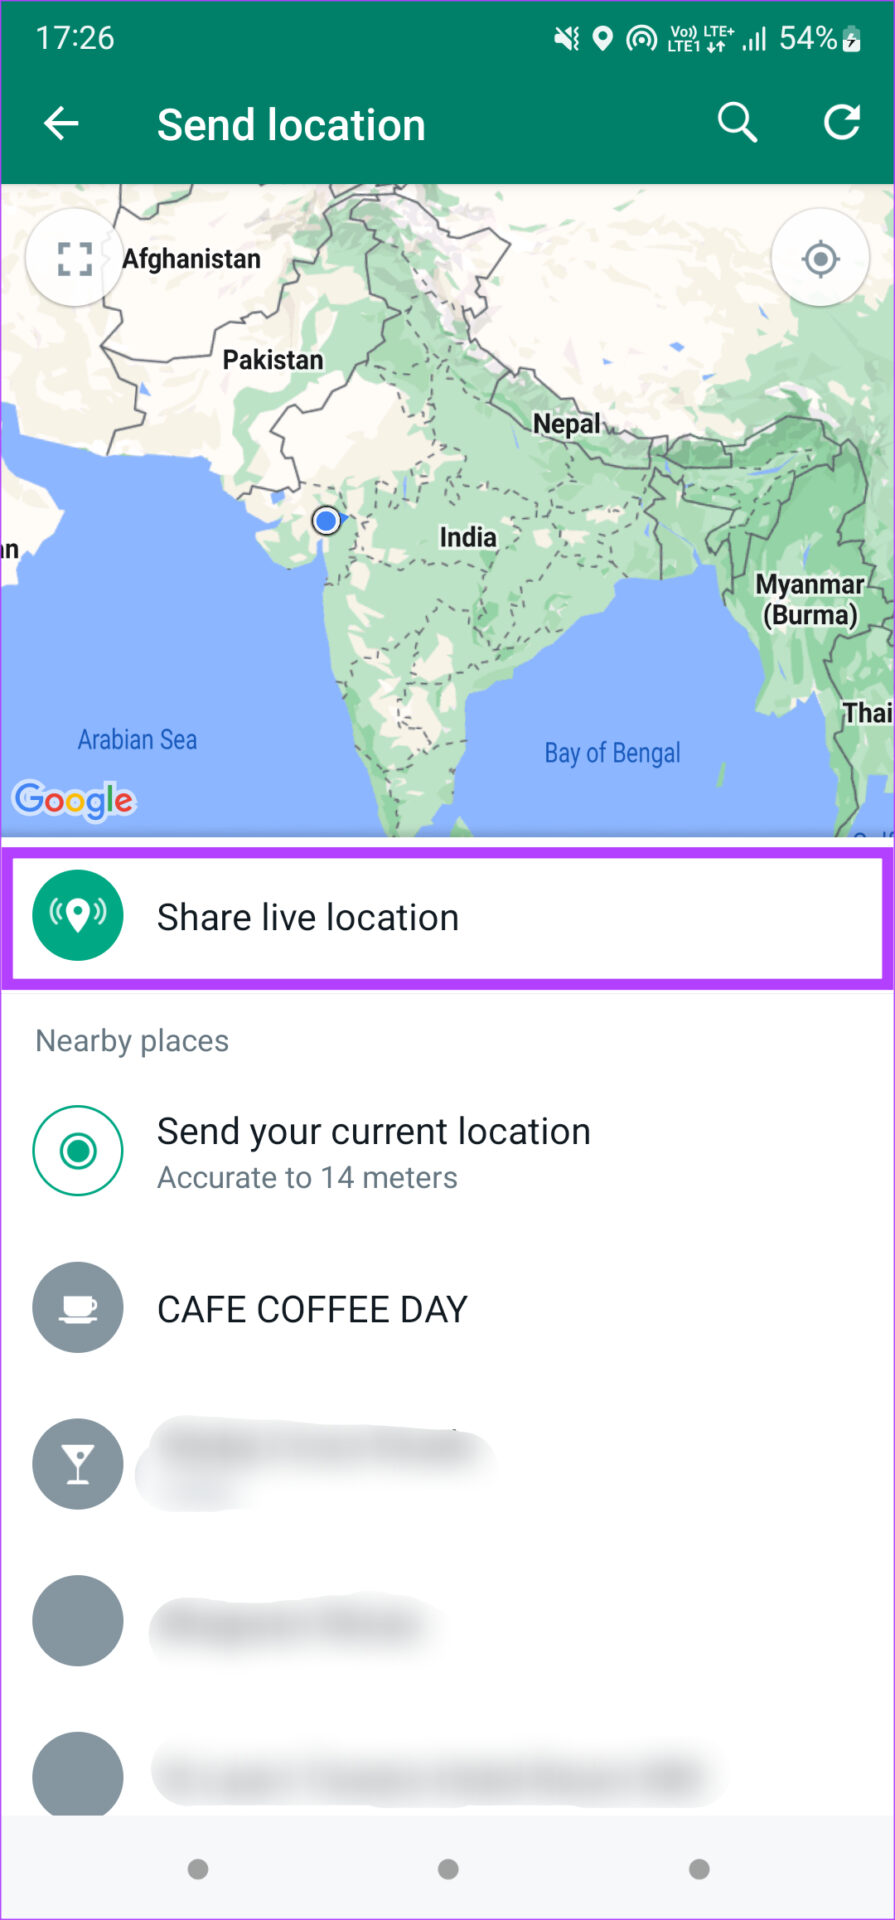 compartir ubicación en vivo